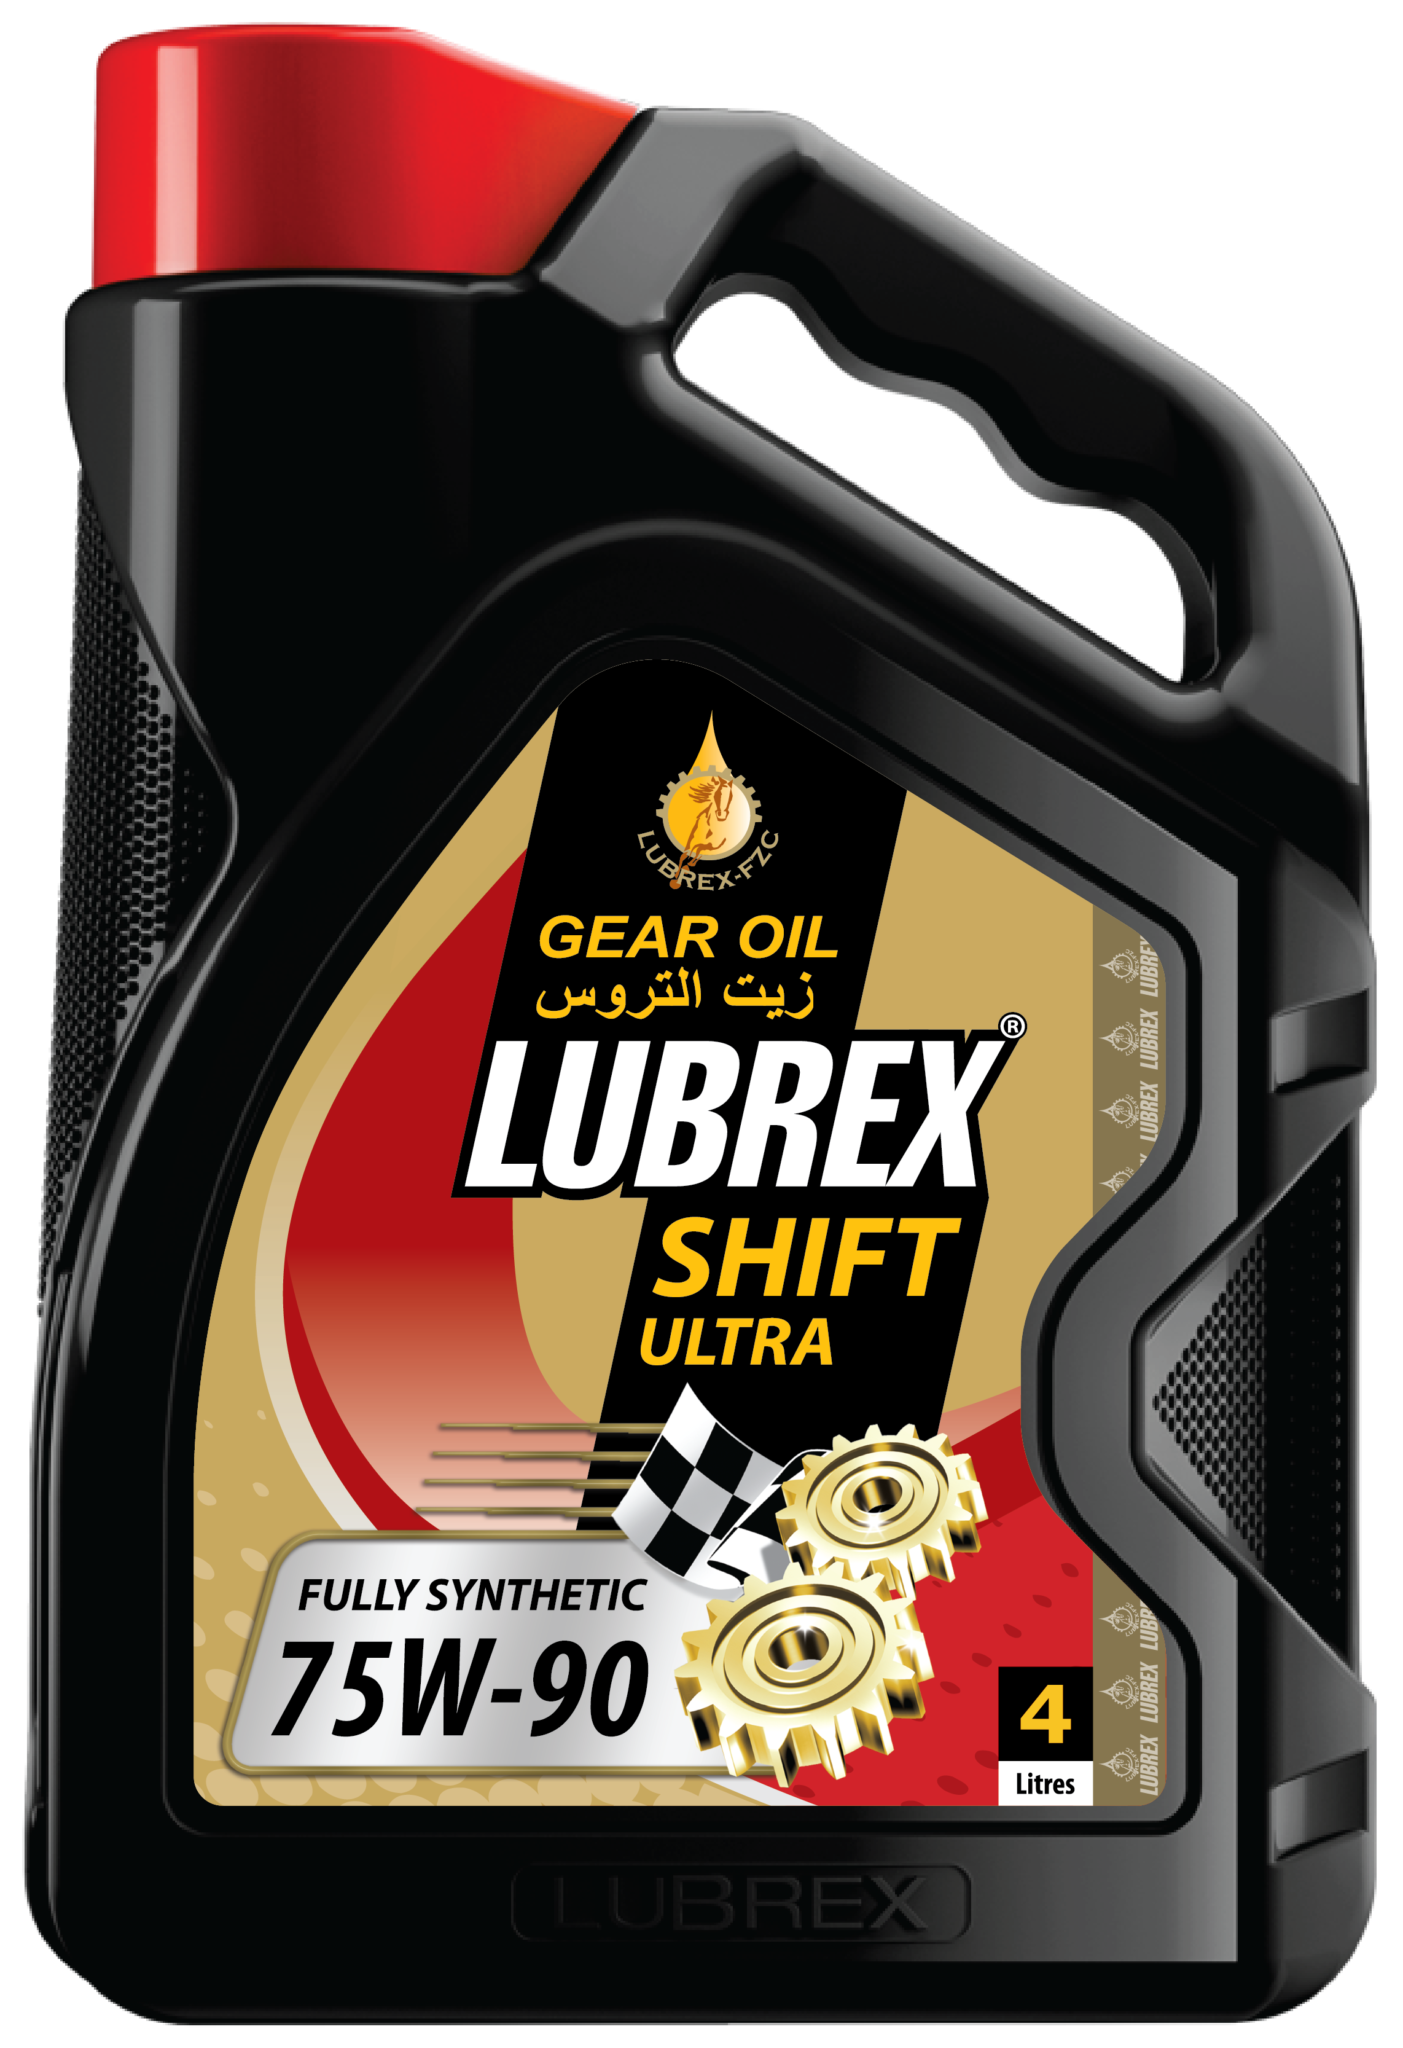 LUBREX SHIFT ULTRA SAE 75W-90 4L